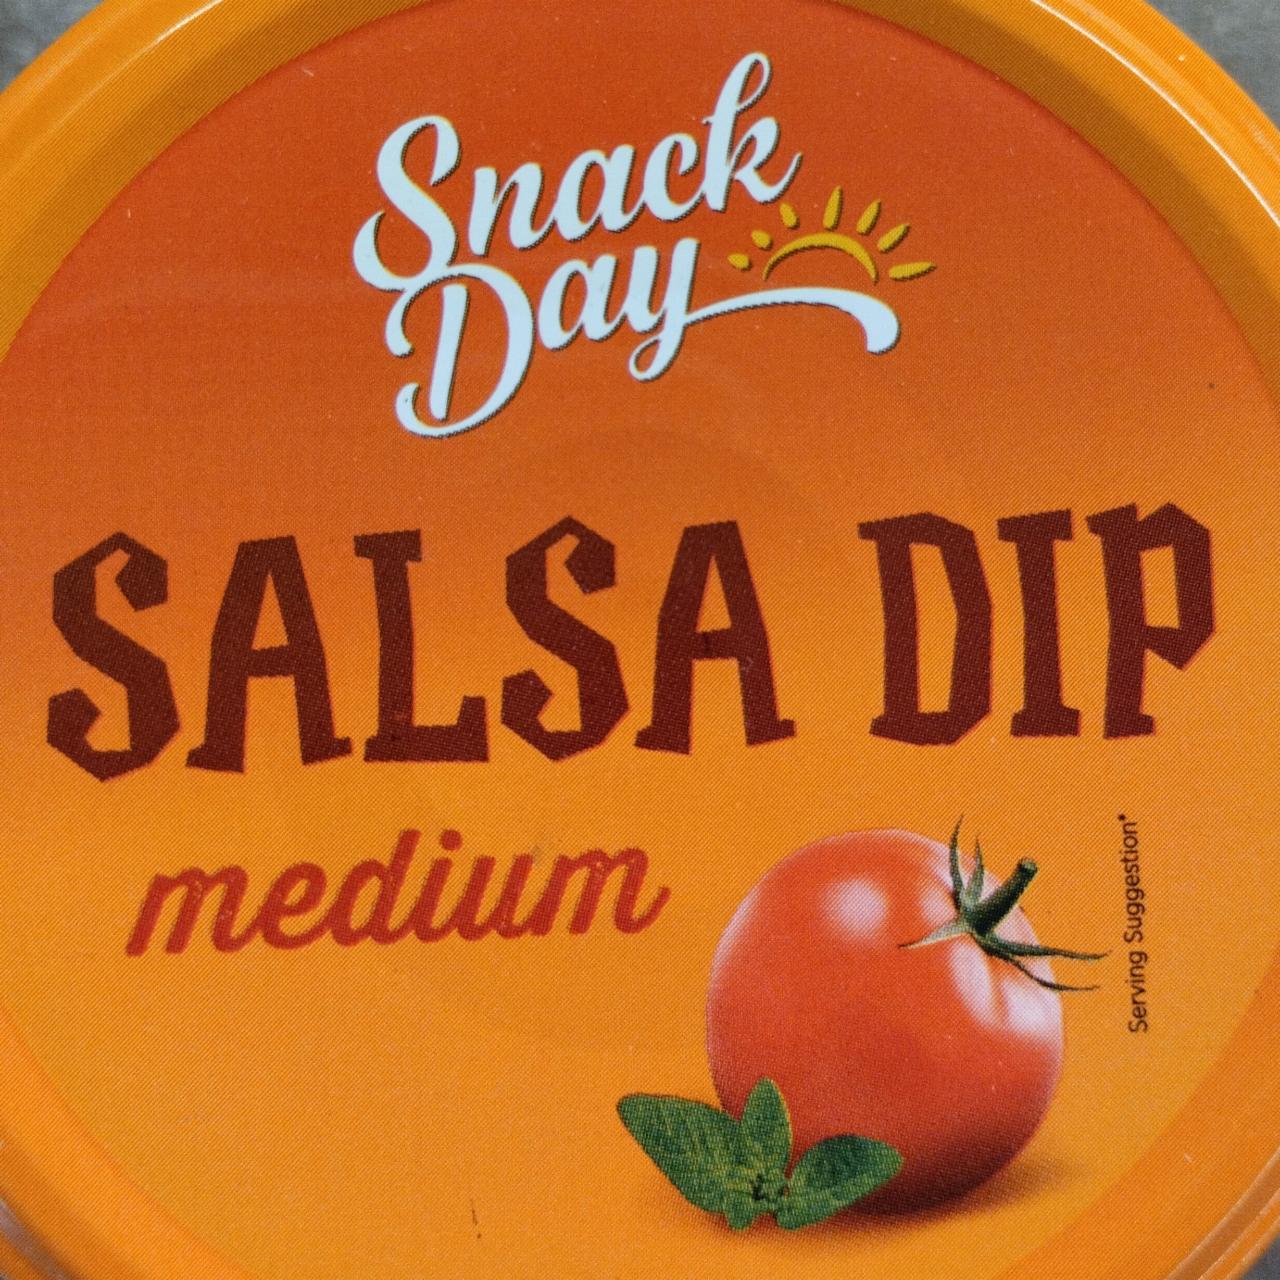 Fotografie - Salsa Dip Medium Snack Day